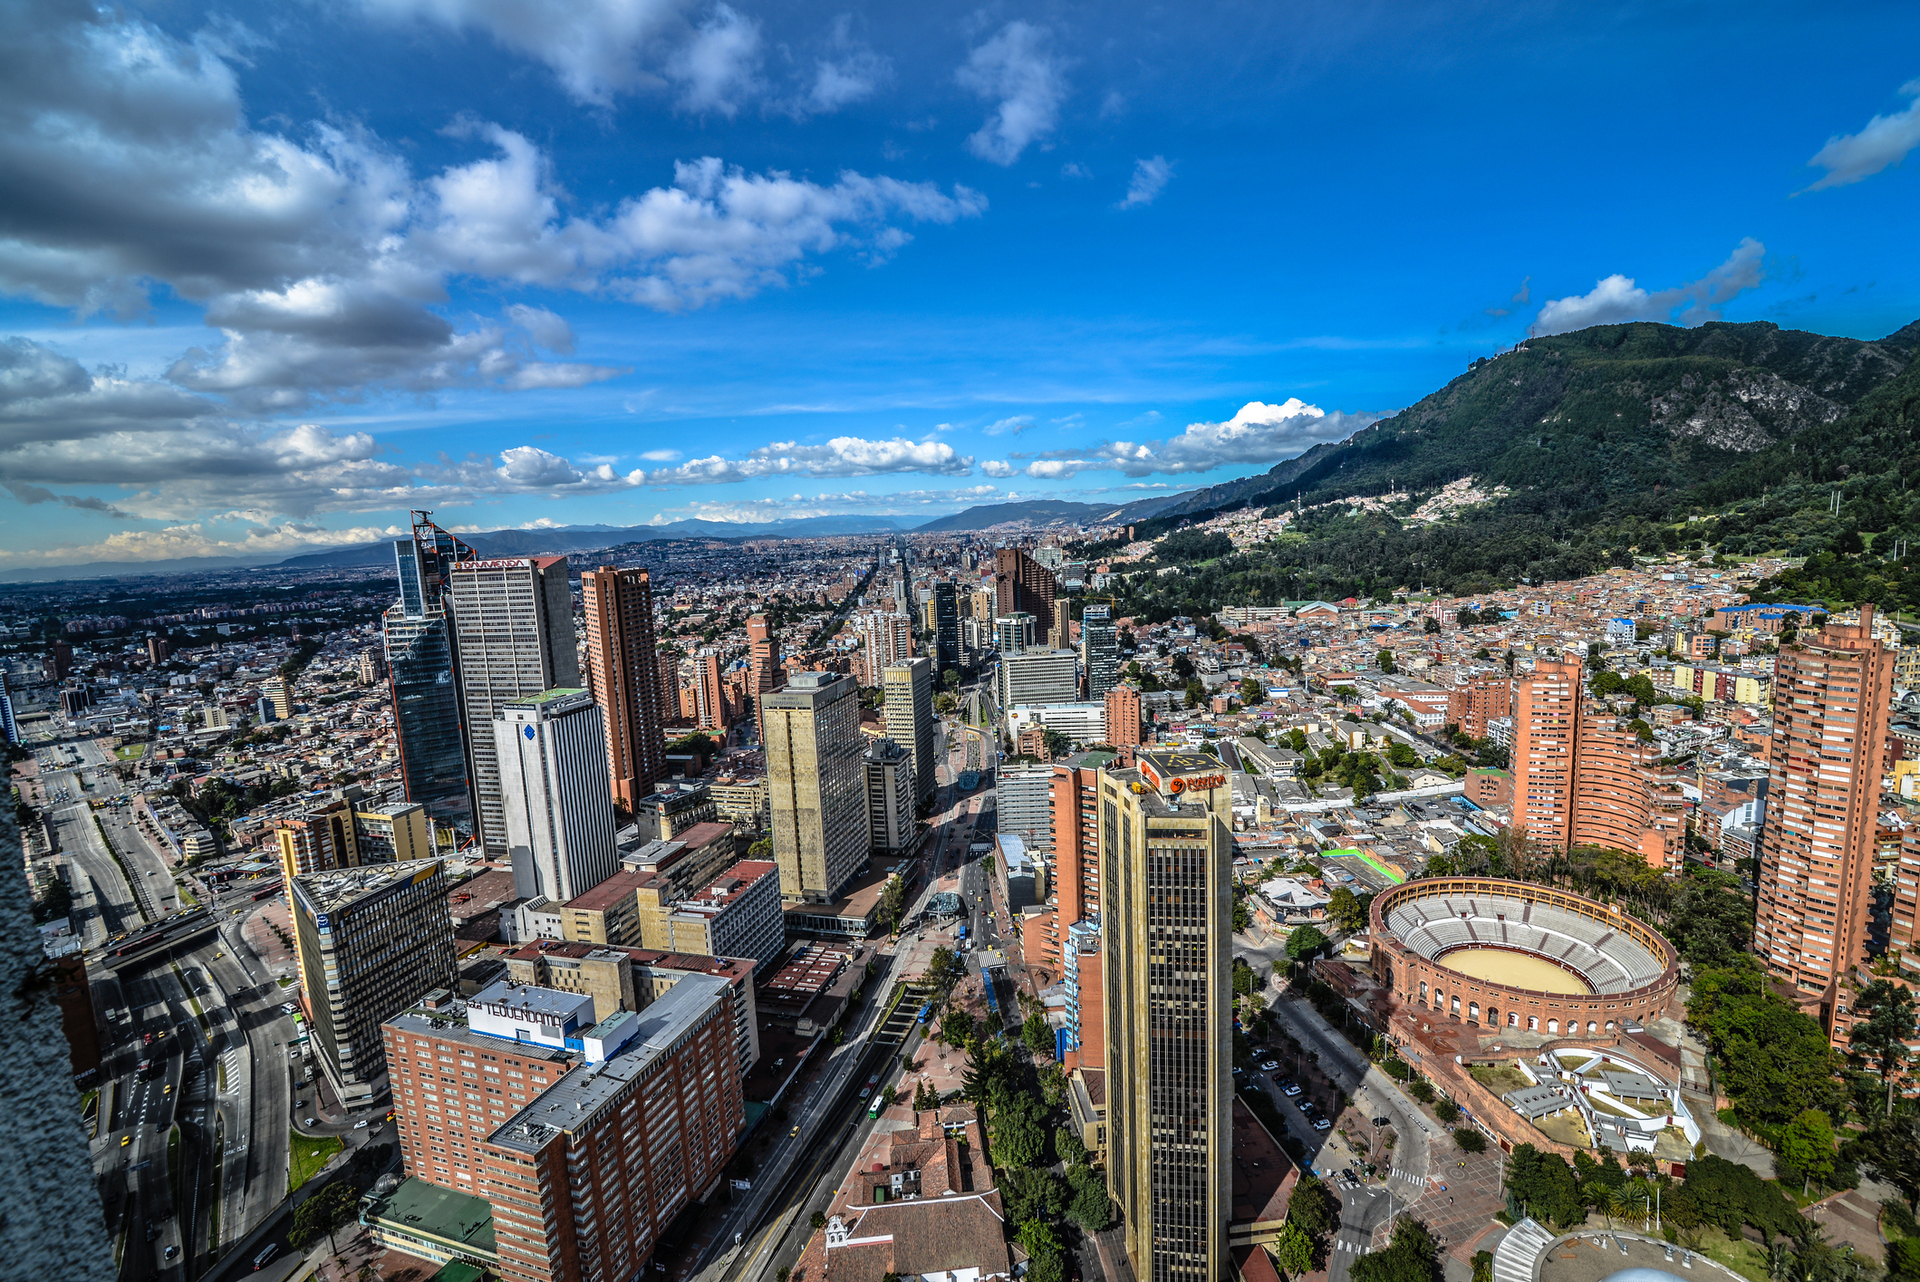 Vista panorâmica de Bogotá, capital da Colômbia